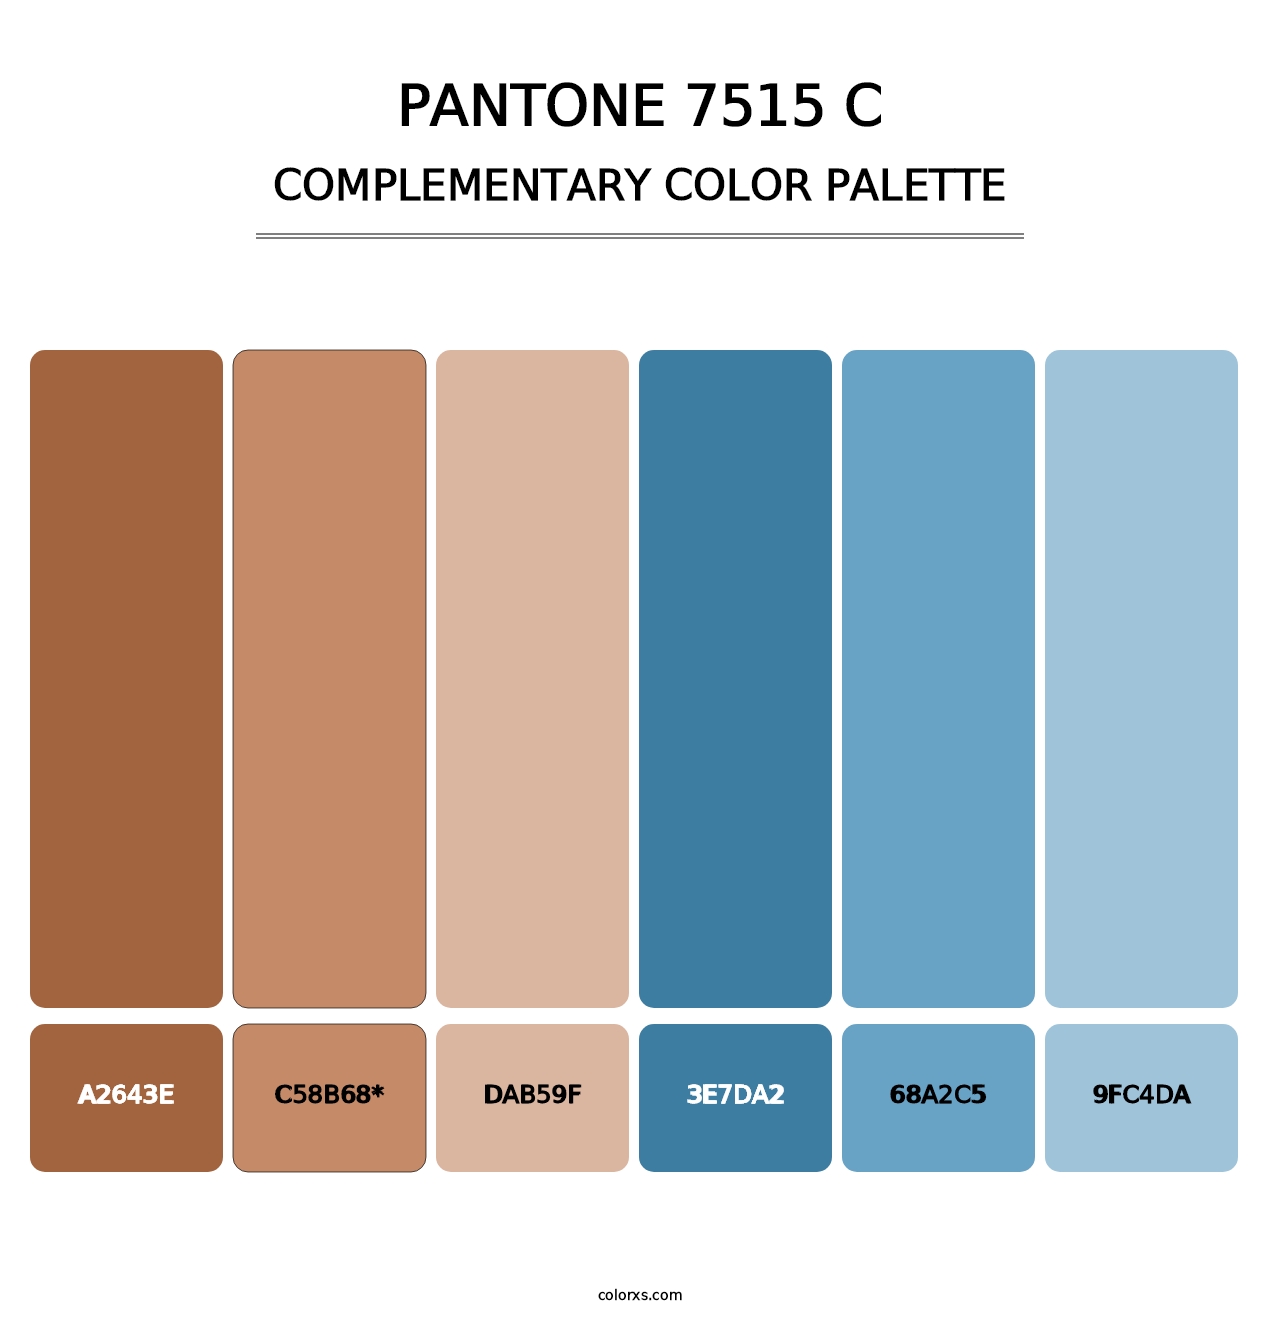 PANTONE 7515 C - Complementary Color Palette